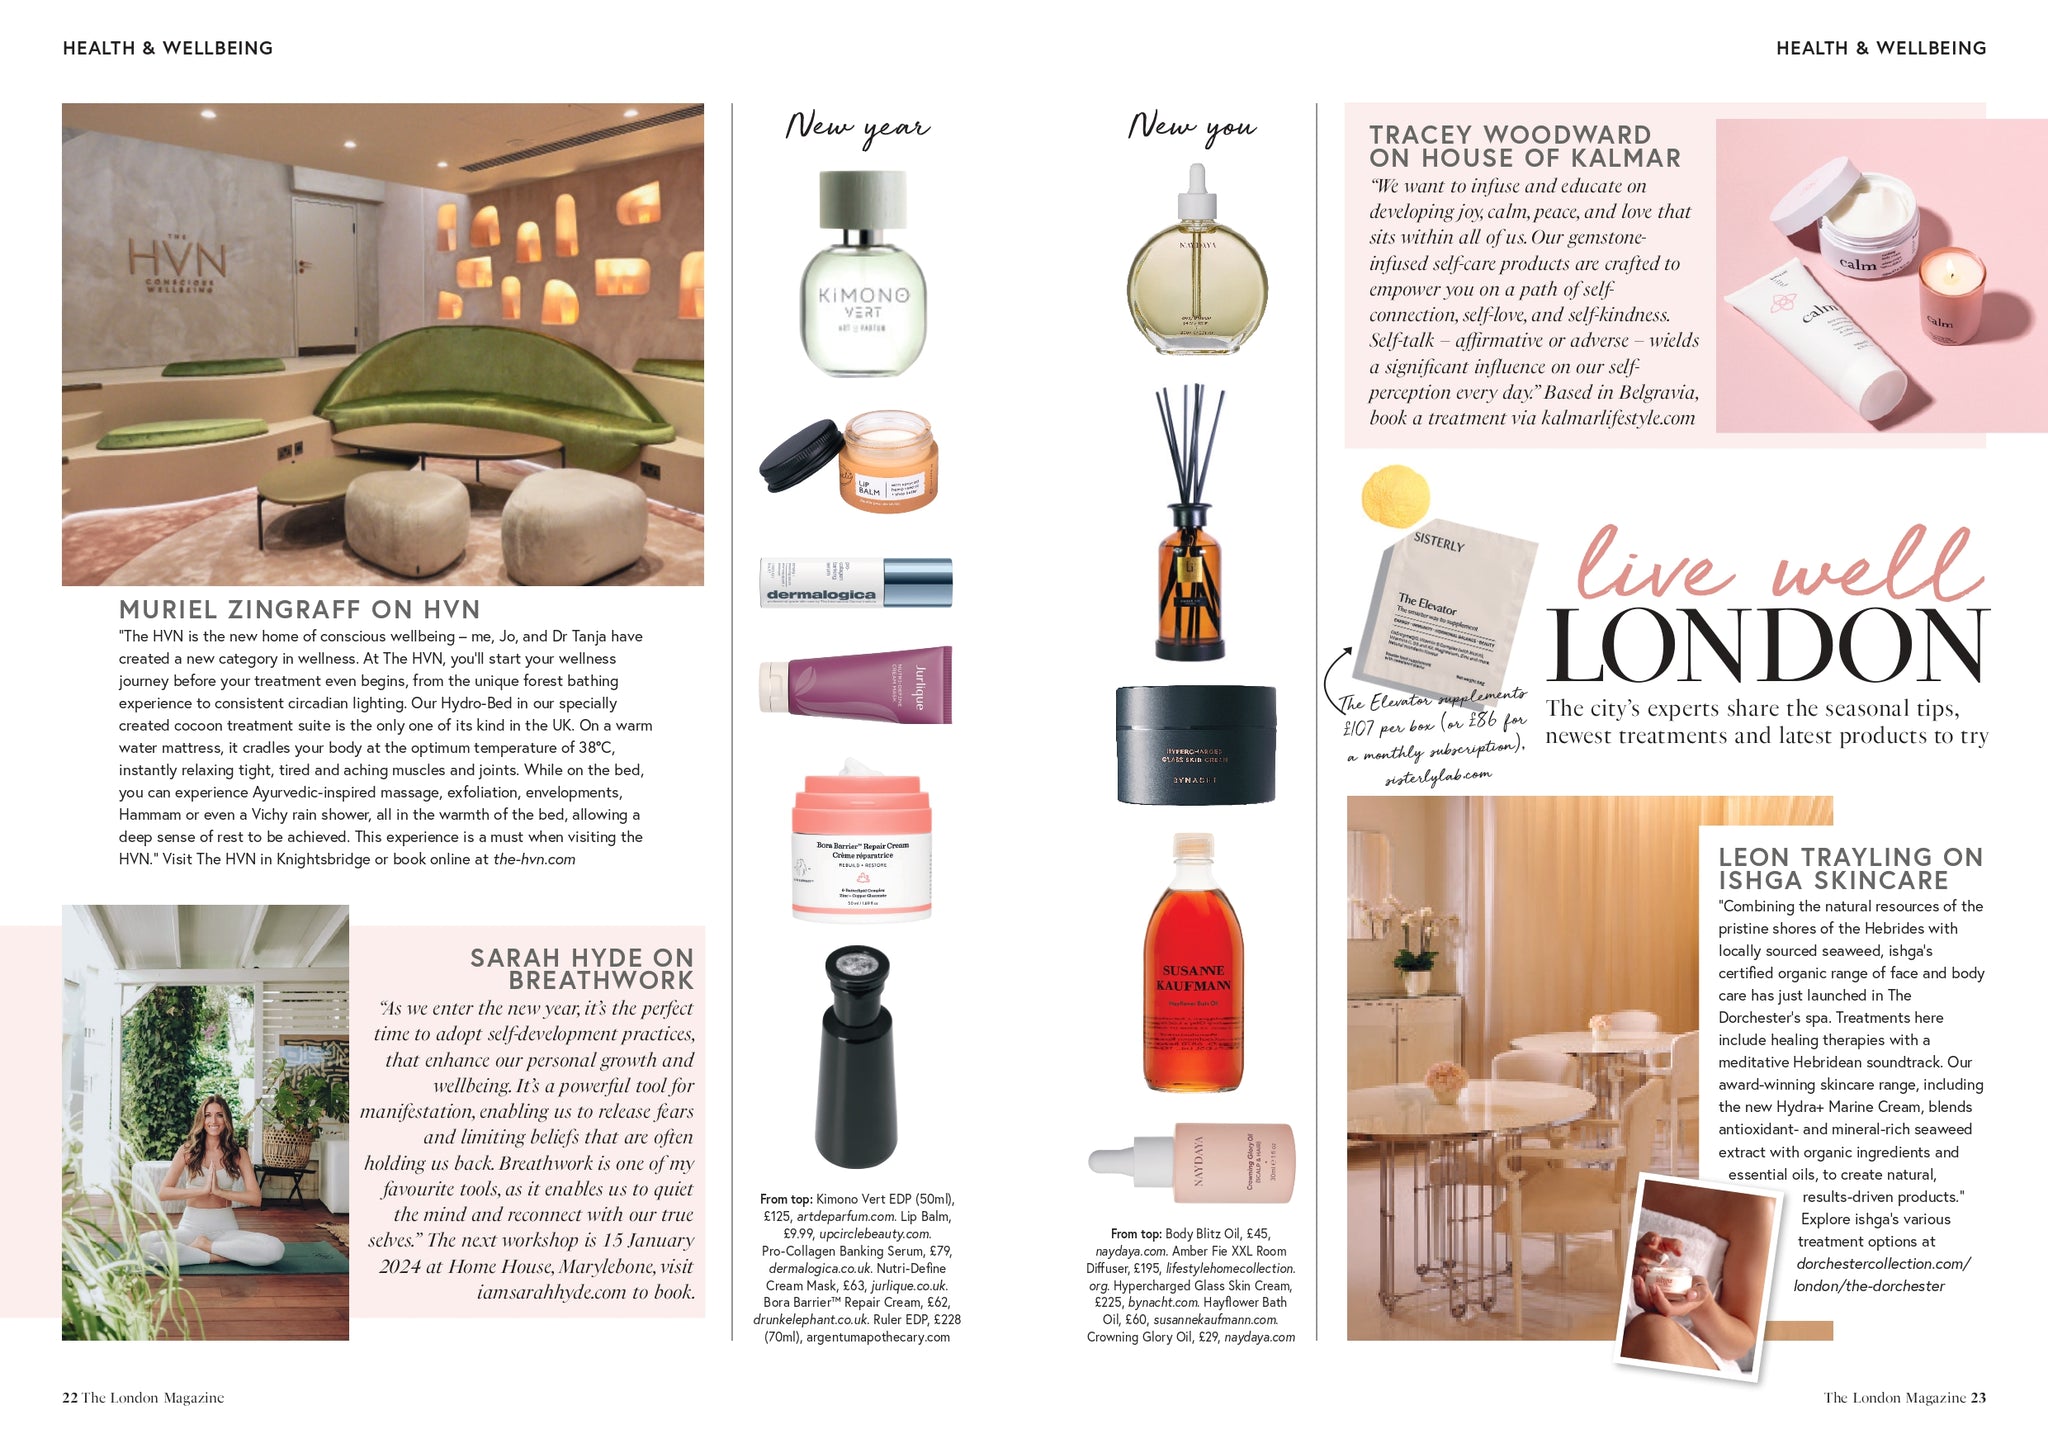 The London Magazine featured Art de Parfum !